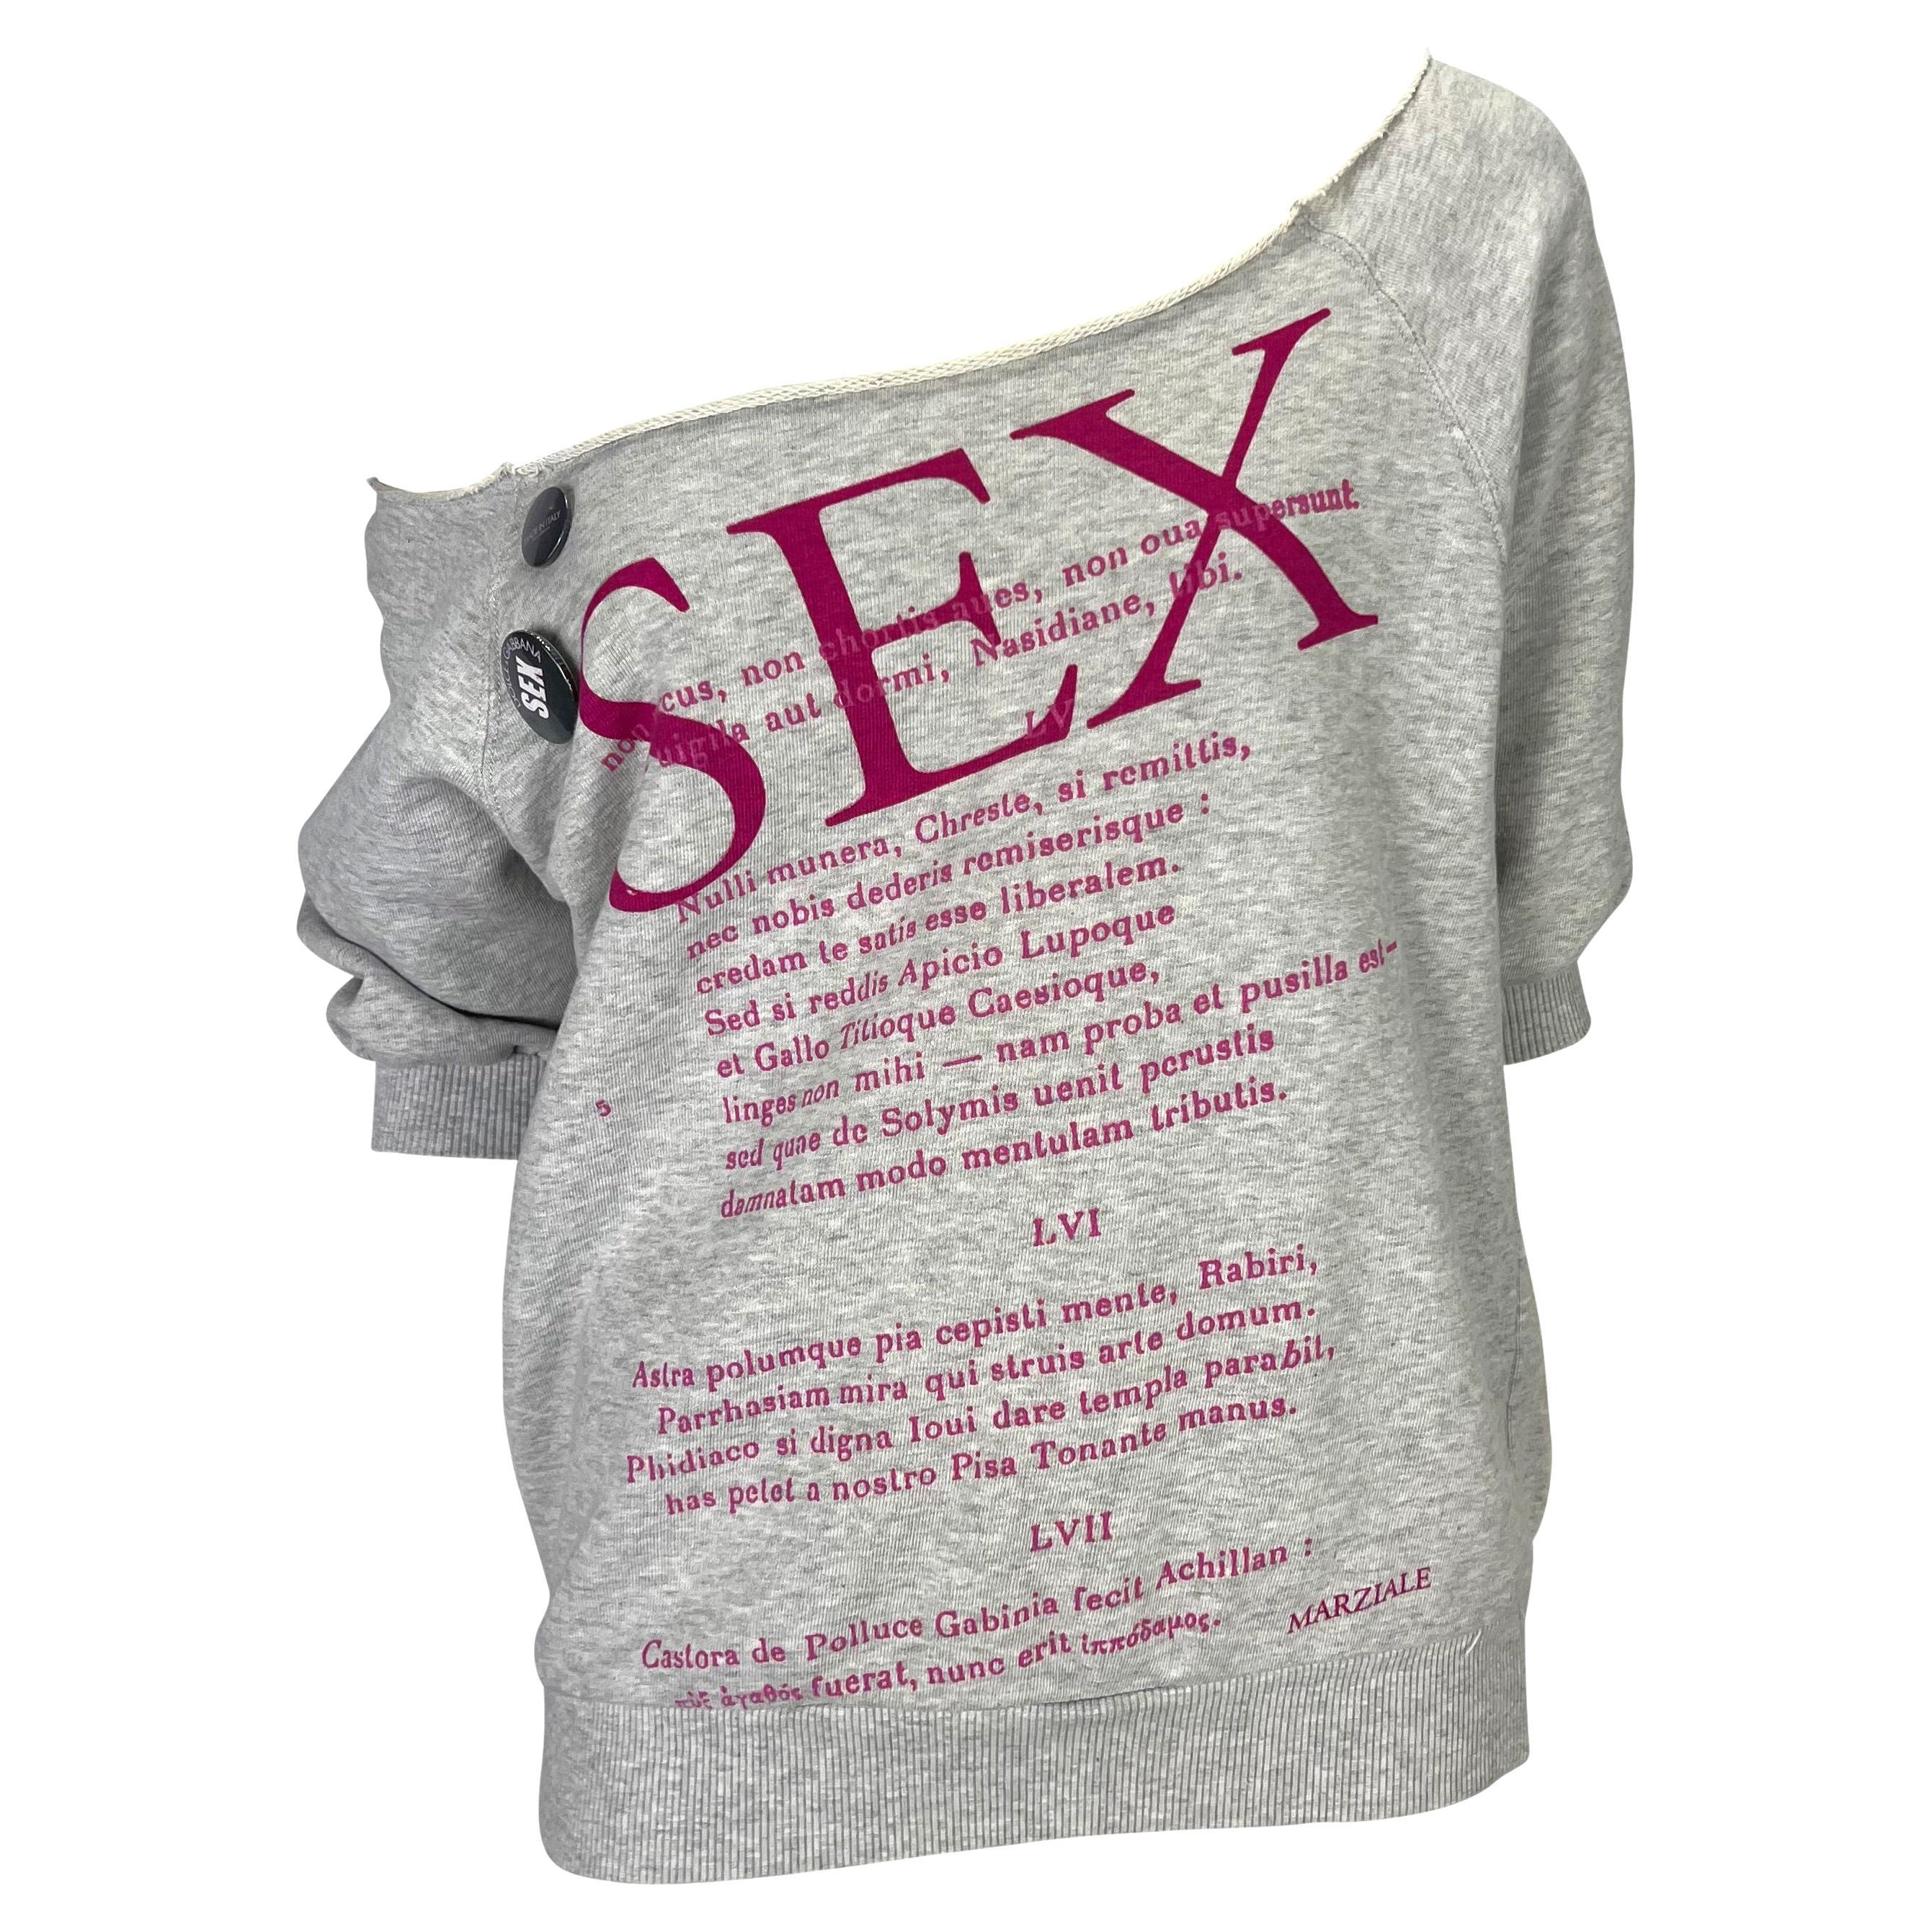 S/S 2003 Dolce & Gabbana 'Sex & Love' Runway Print Pin Cropped Sweatshirt Top For Sale